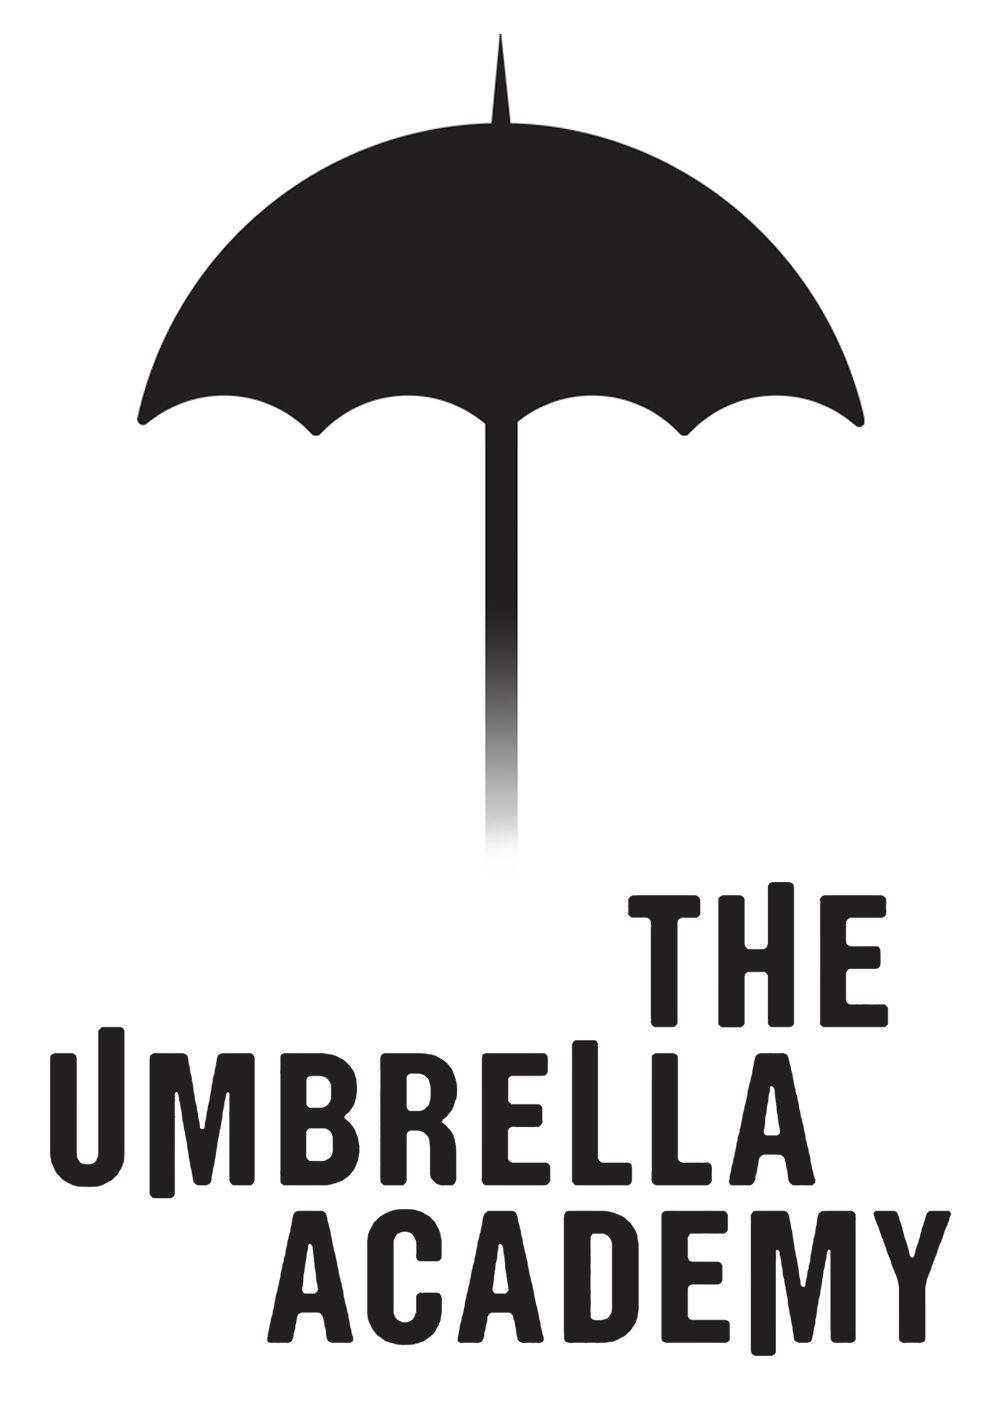 Unite! The Umbrella Academy